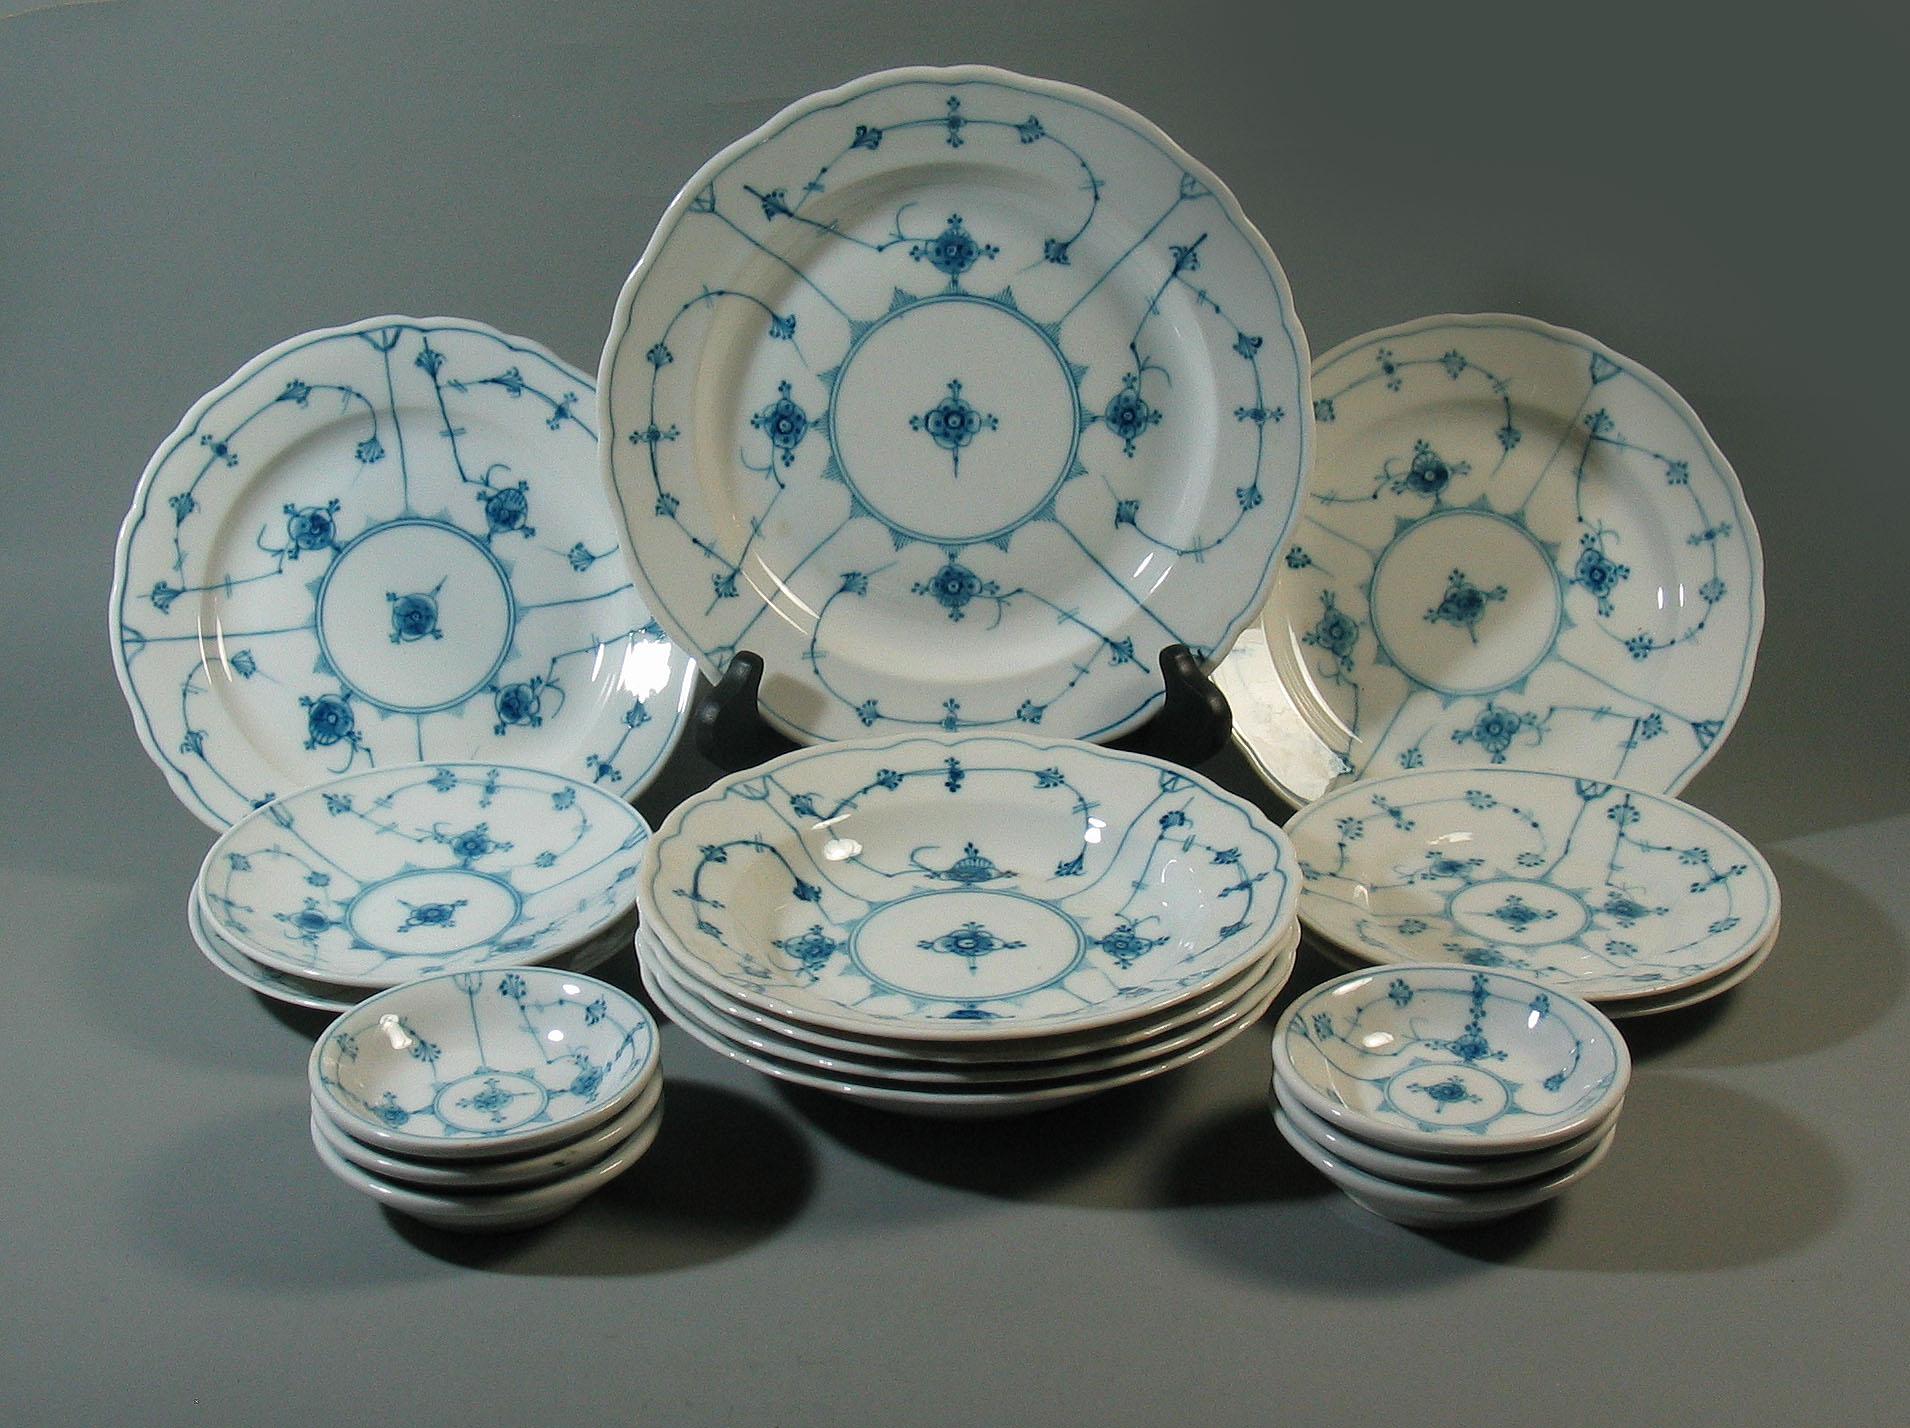 Lot of 17 Porsgrund Hand Painted Porcelain Plates in “Bogstad Straw” Pattern 1